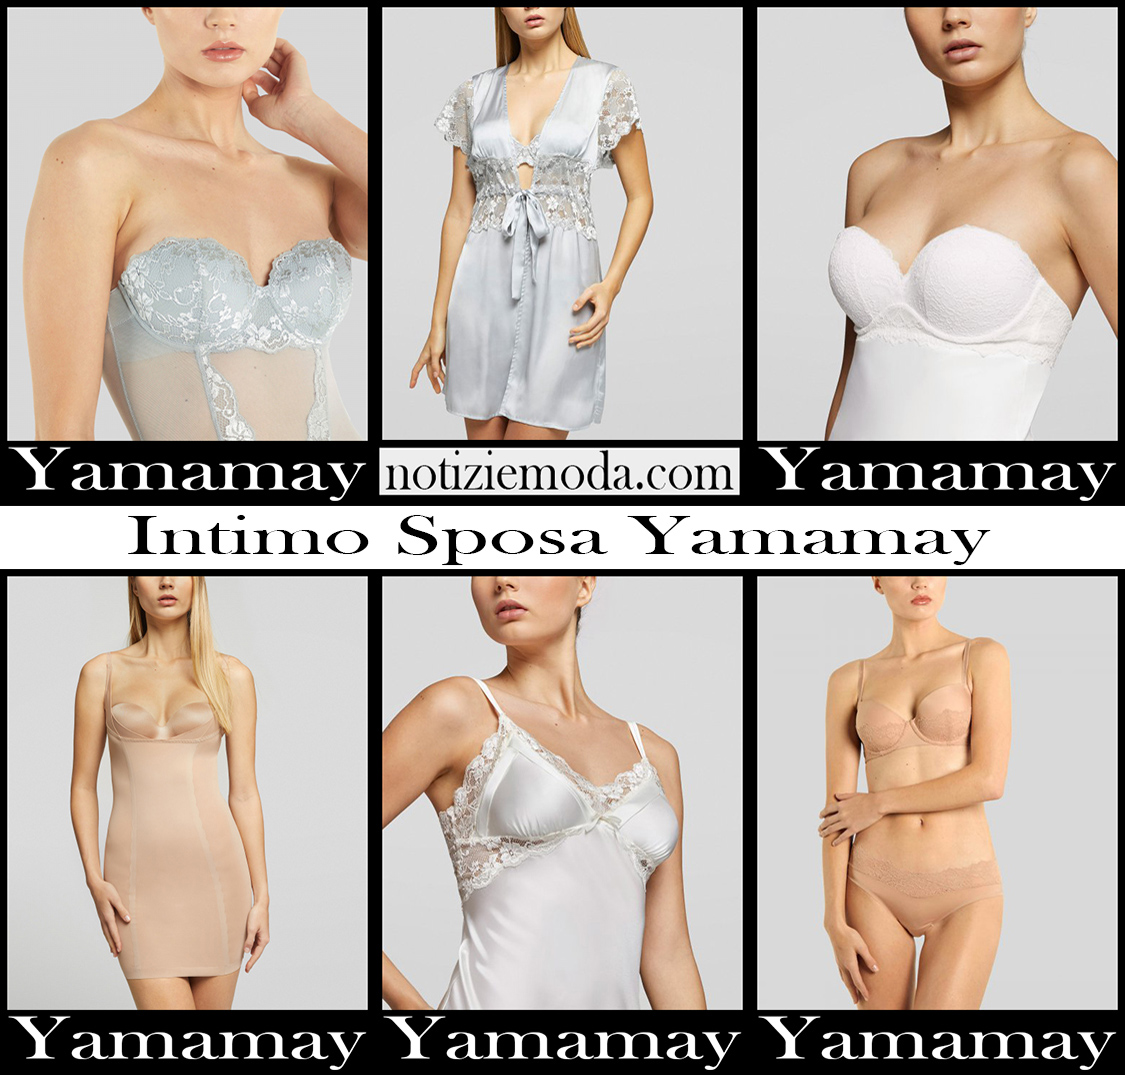 https://www.notiziemoda.com/wp-content/uploads/2020/08/Intimo-sposa-Yamamay-2020-21-abbigliamento-donna.jpg